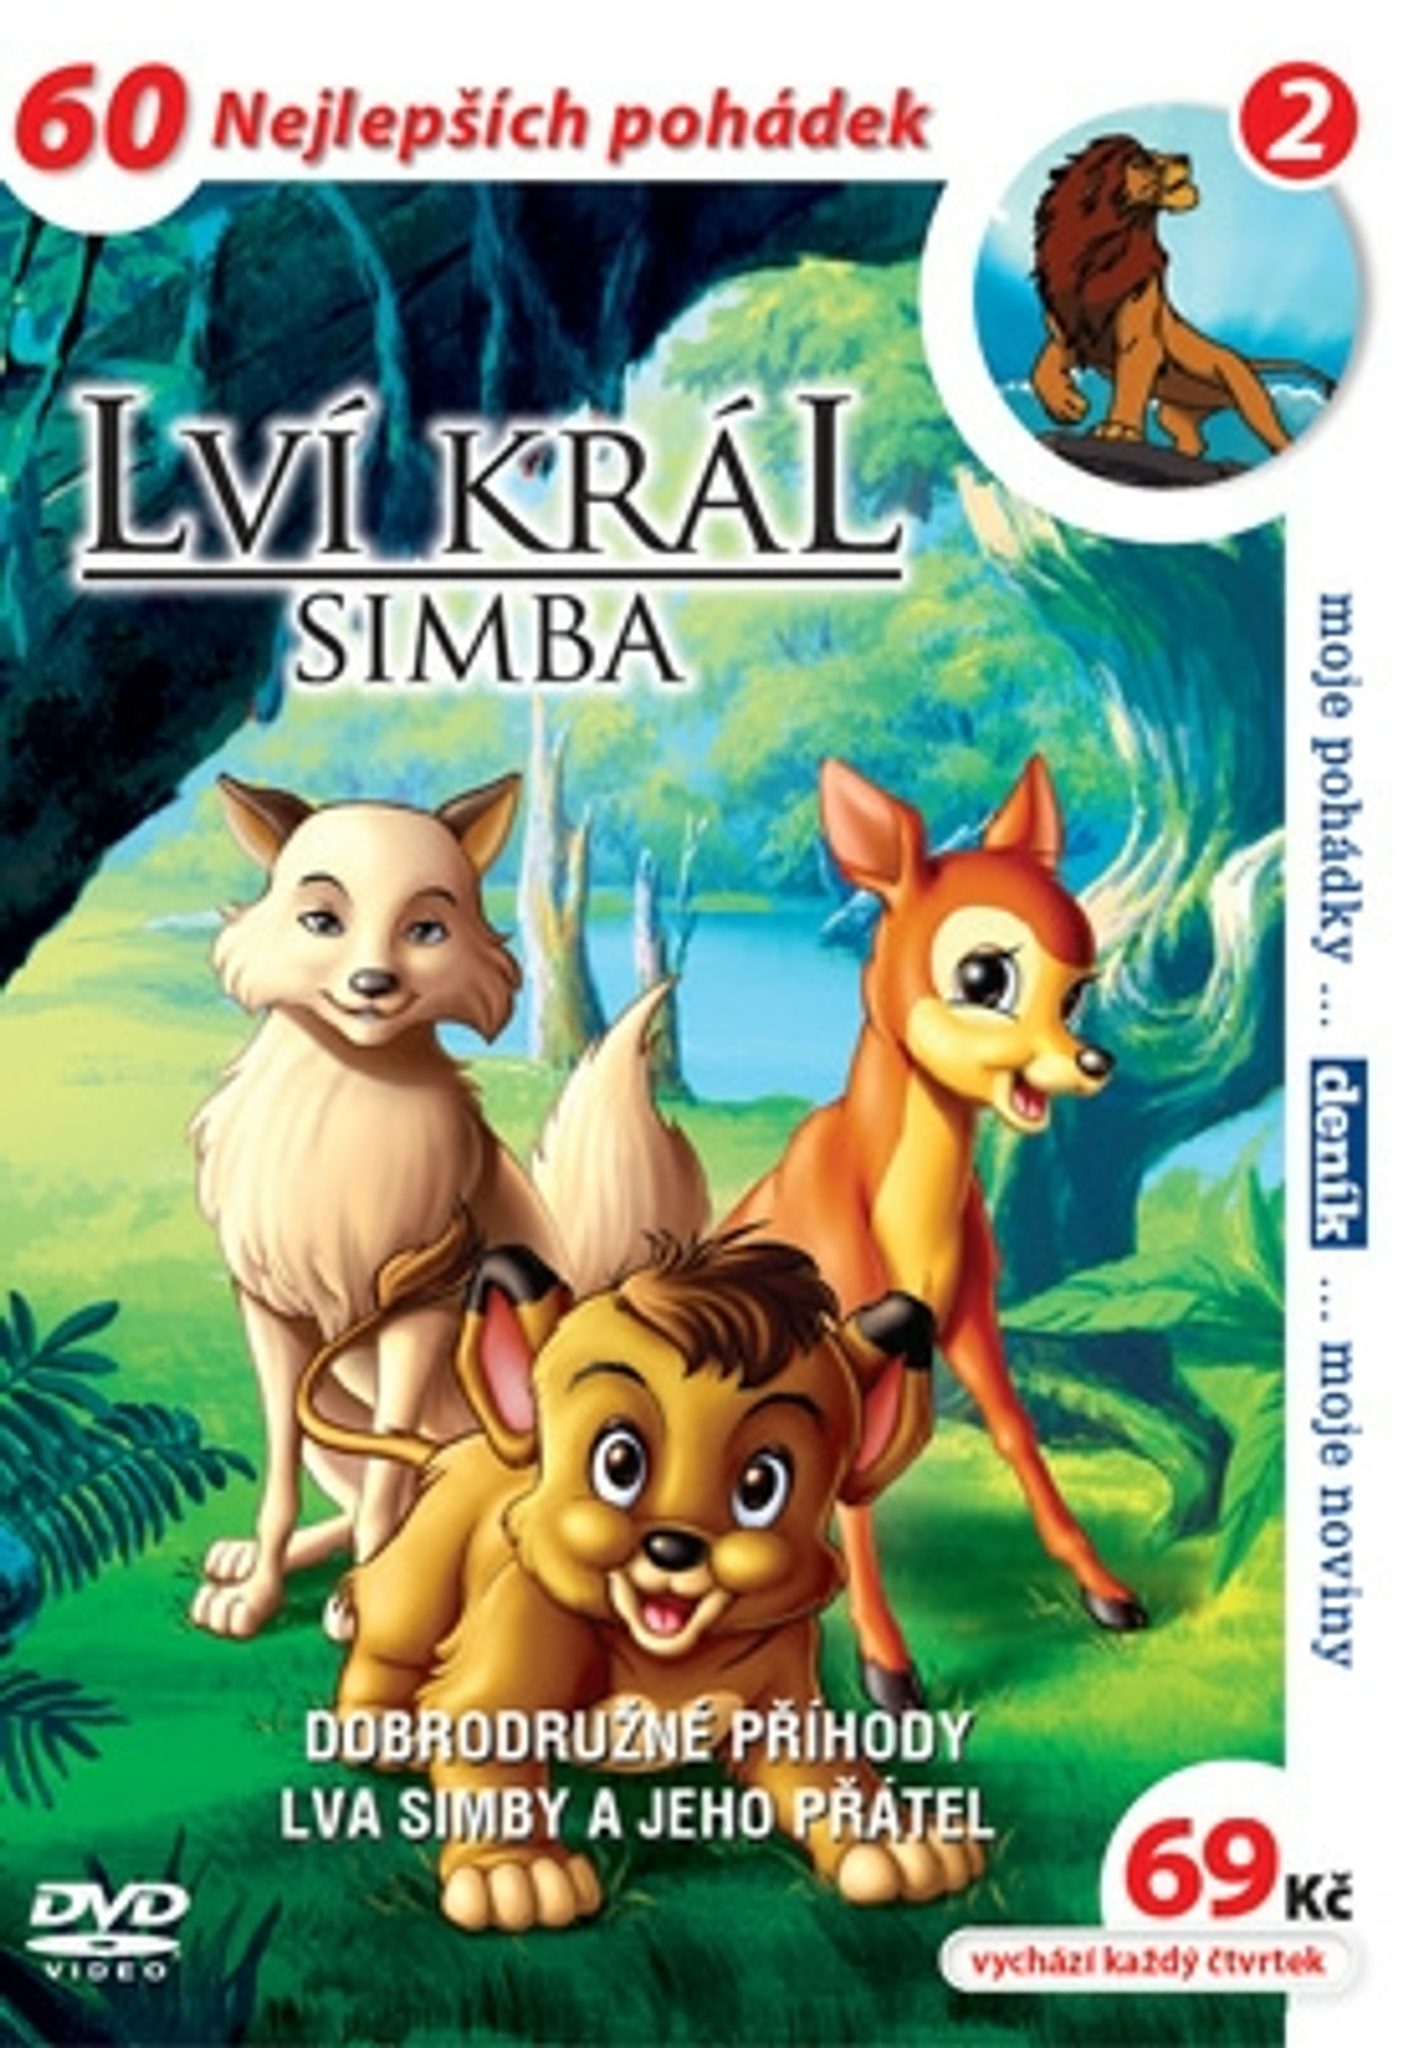 DVD Lv krl - Simba 02